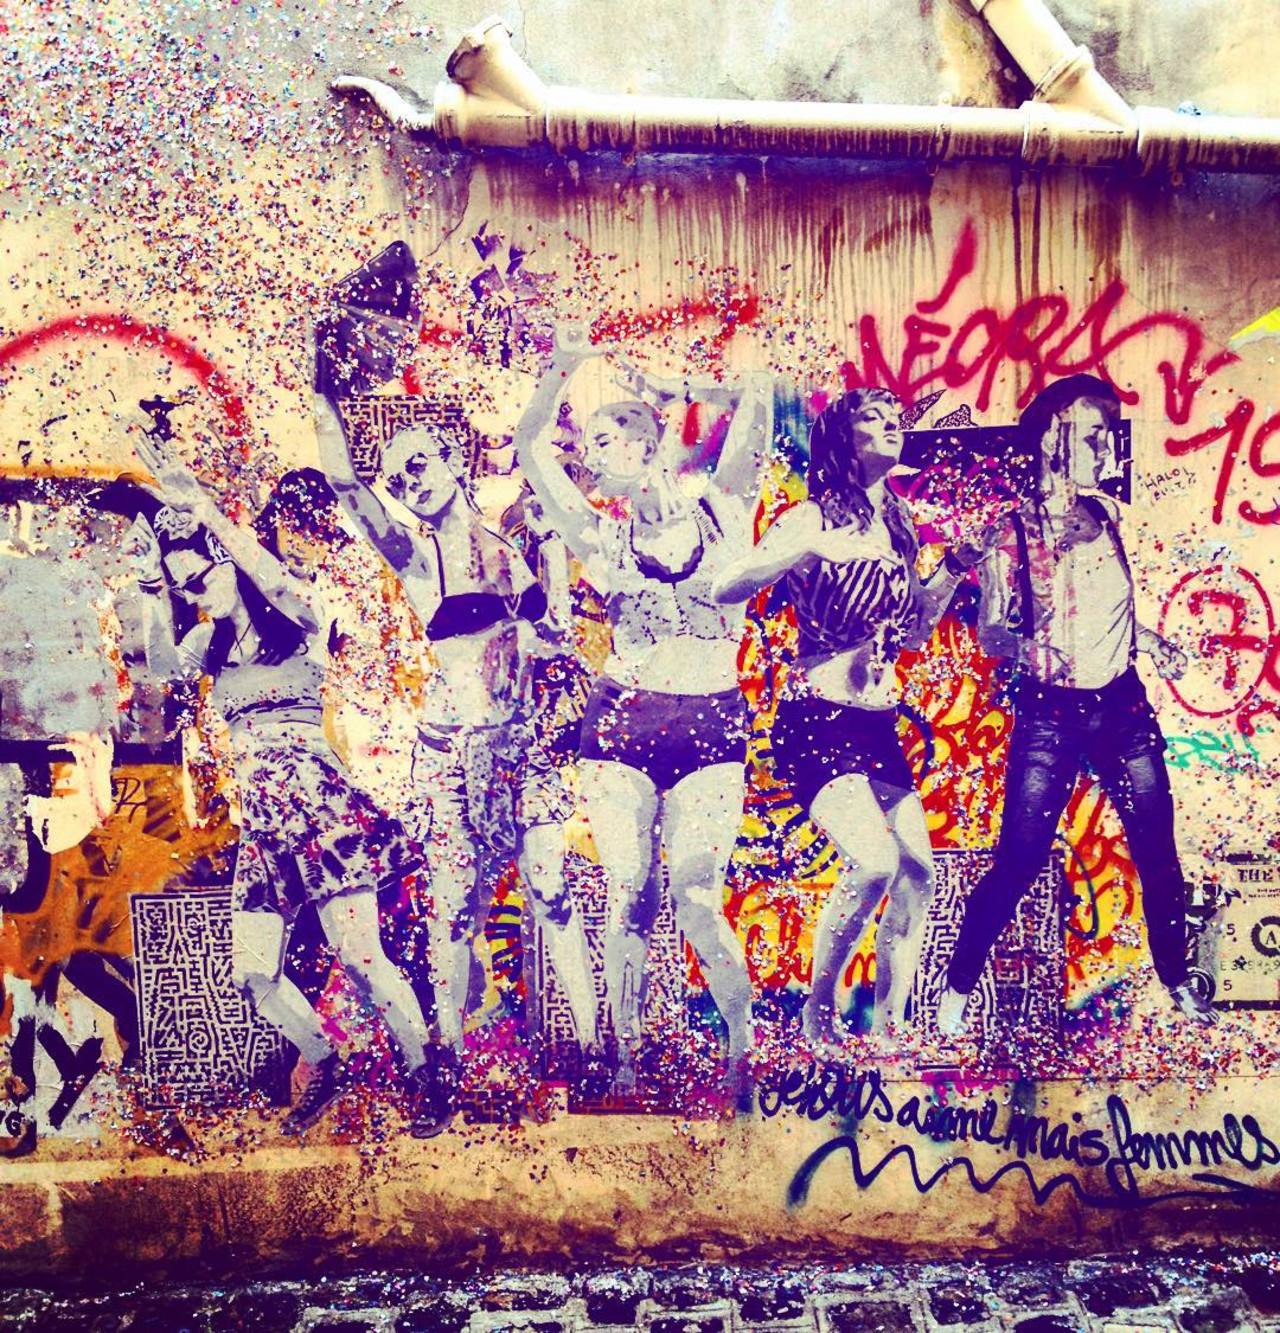 #Paris #graffiti photo by @franconetti_musicdesign http://ift.tt/1jkuMSd #StreetArt http://t.co/luNFCTITJR